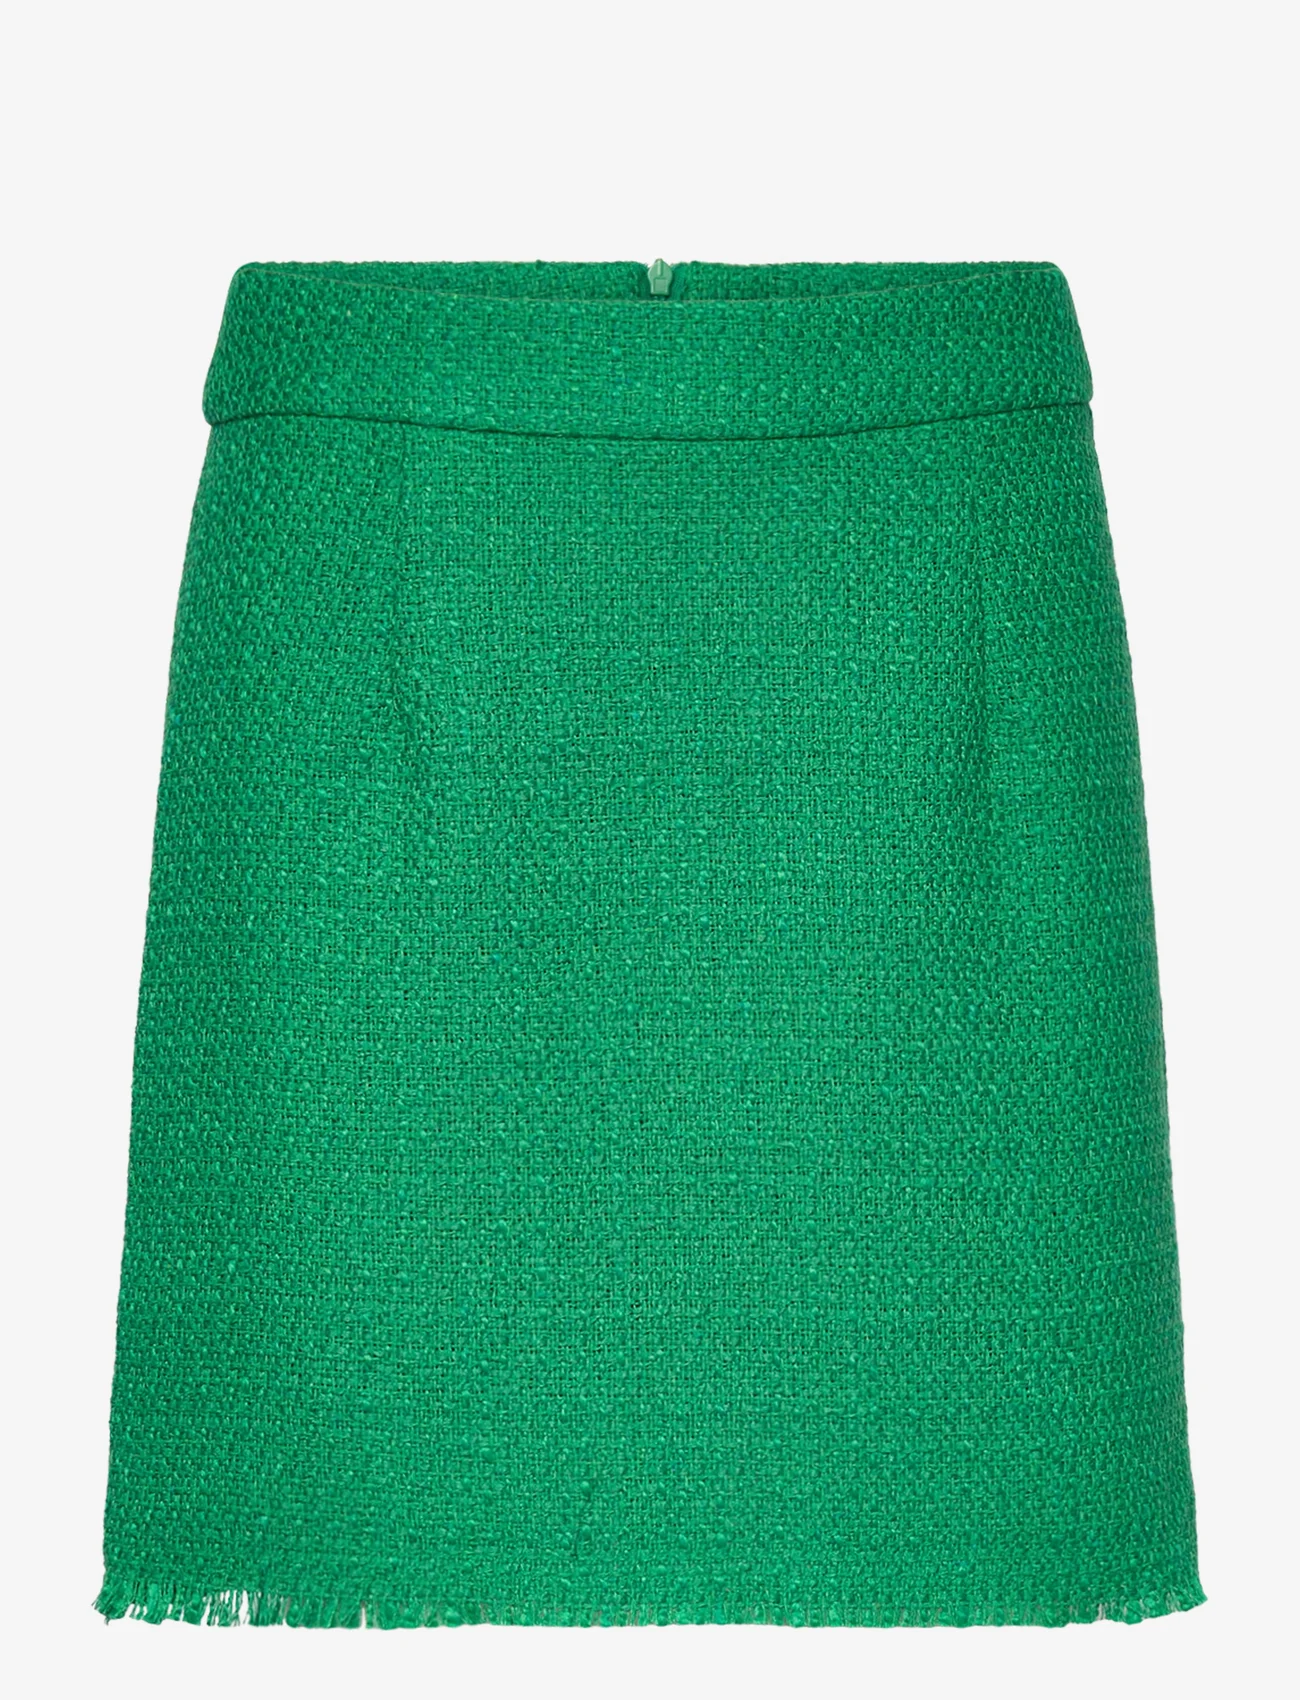 Saint Tropez - BirdieSZ Skirt - kurze röcke - verdant green - 0